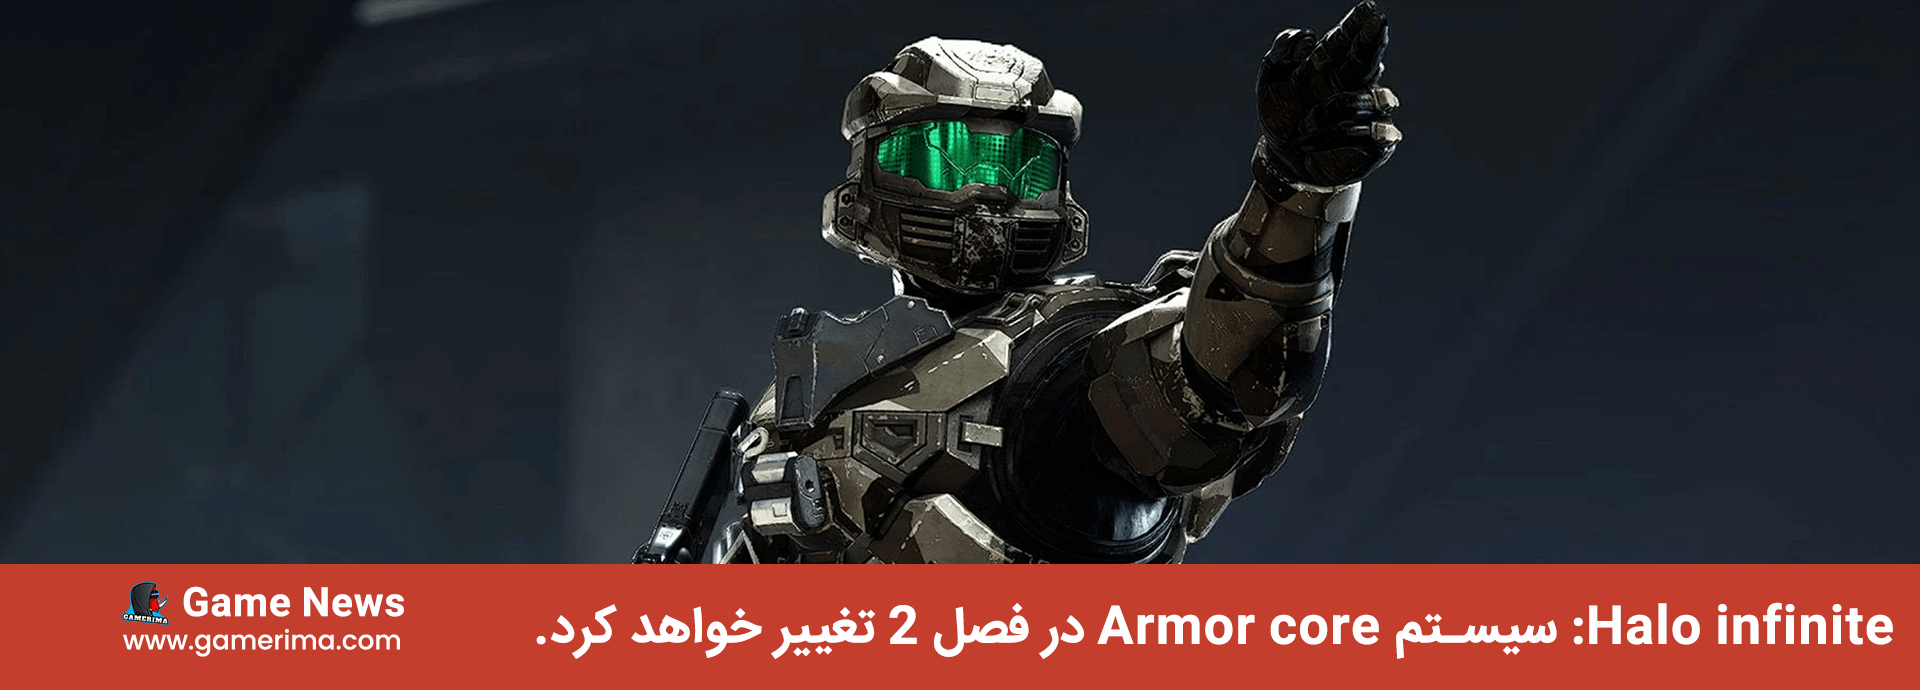 Halo infinite: سیستم Armor core در فصل 2 تغییر خواهد کرد.